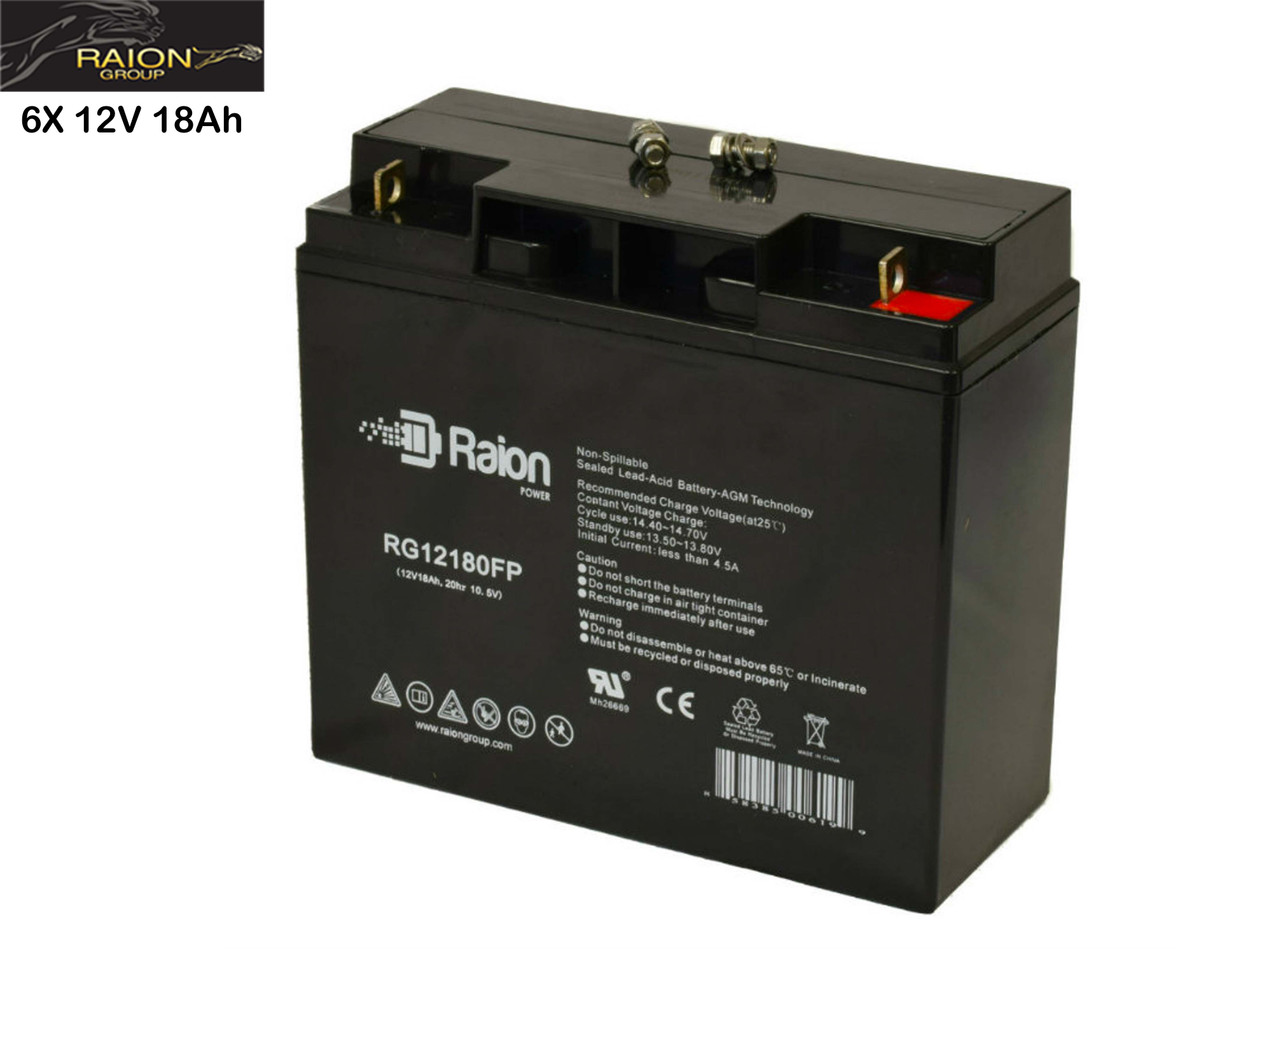 Raion Power Replacement 12V 18Ah Battery for Tao Motor Aquarius 722 - 6 Pack